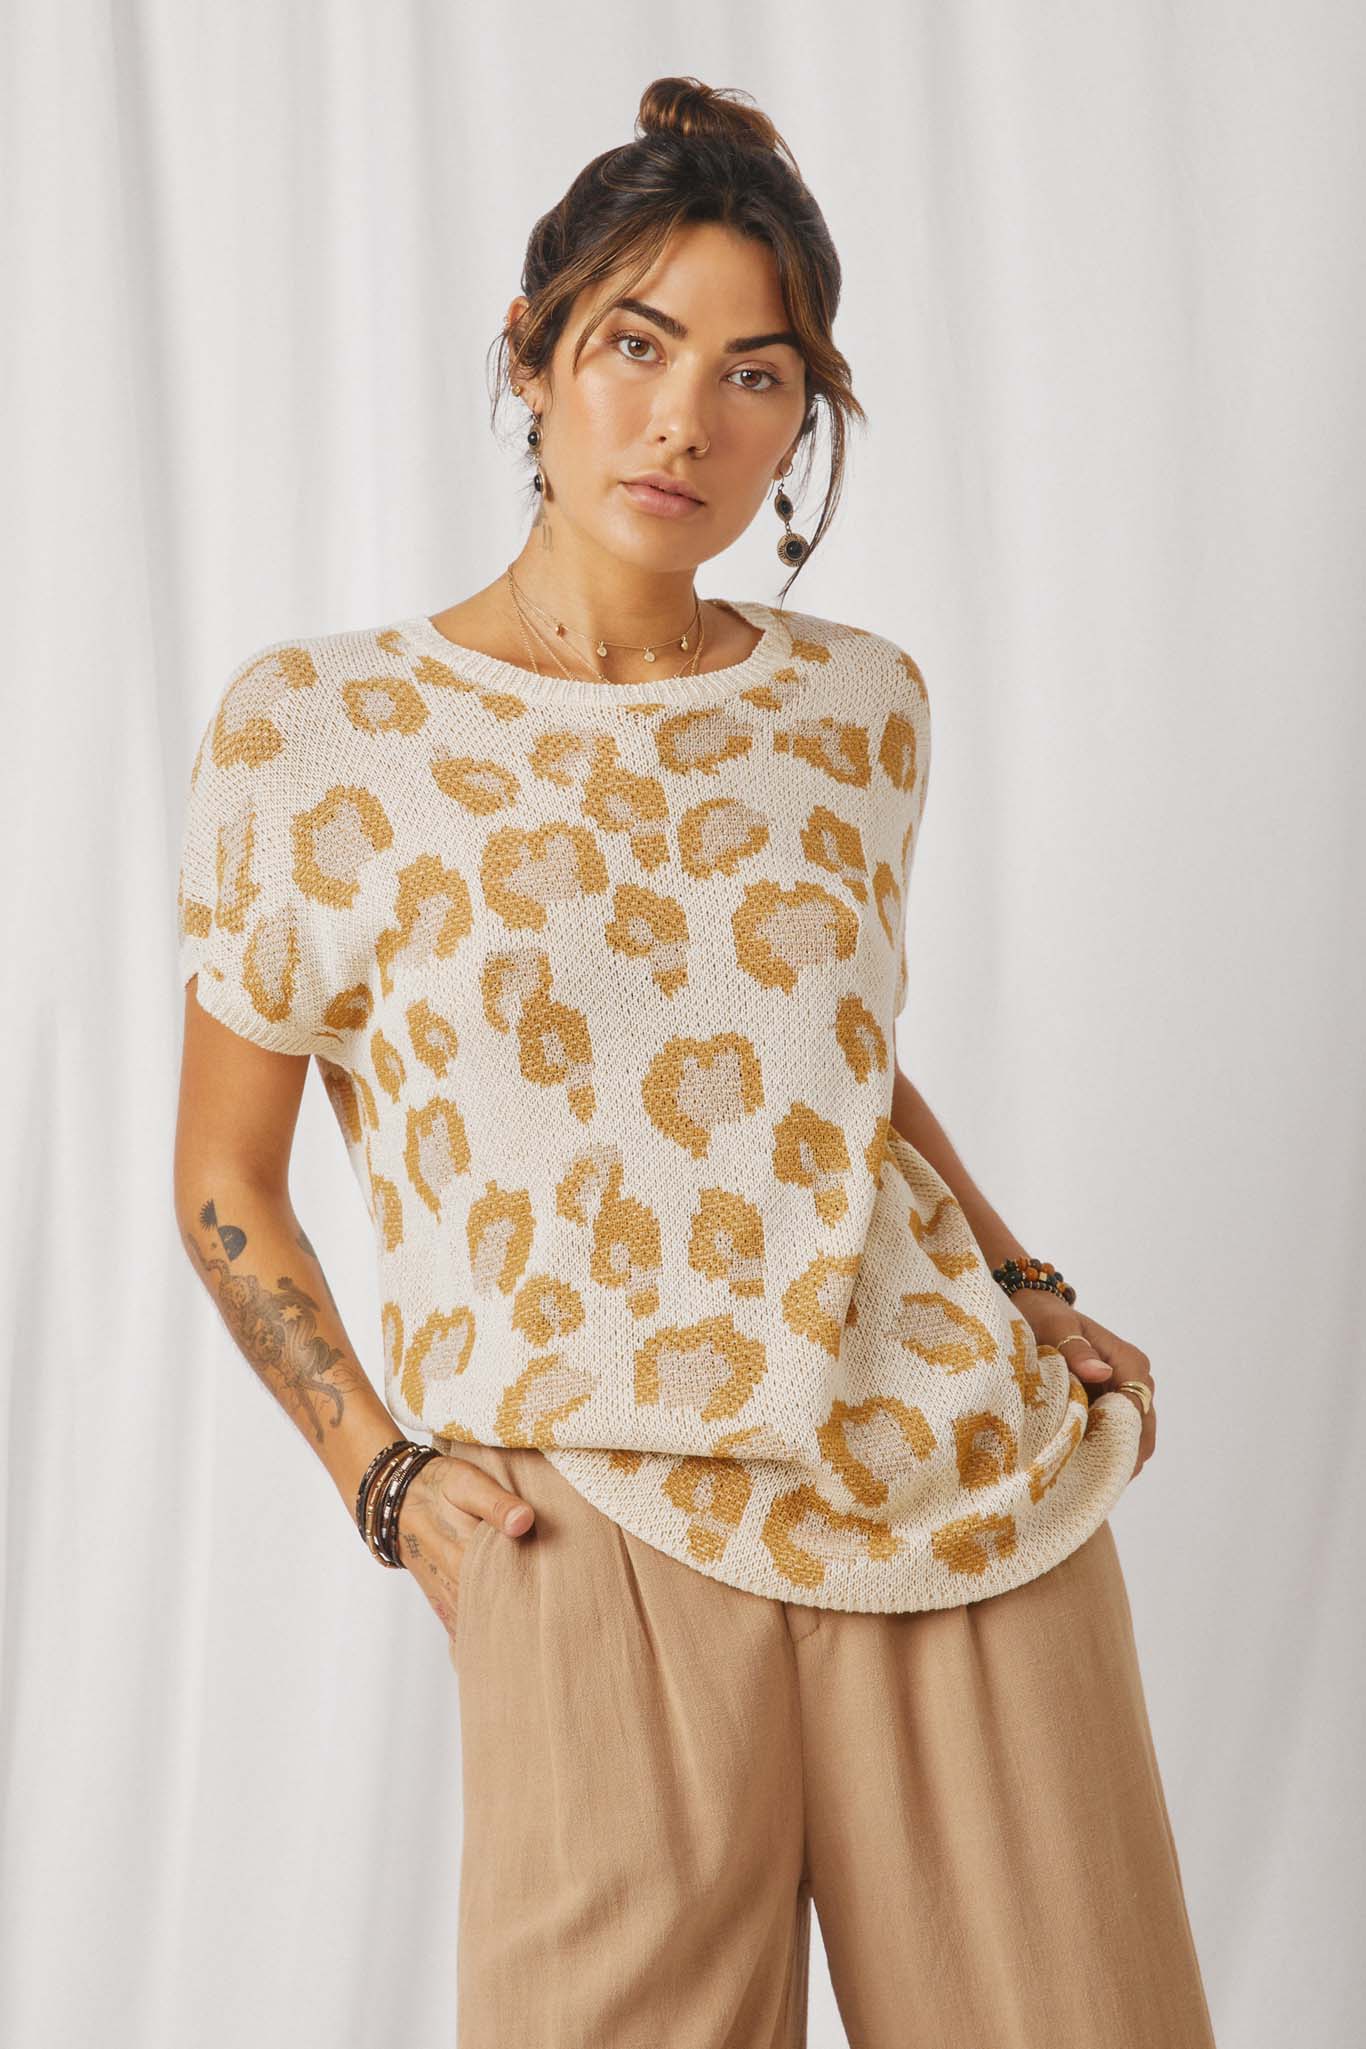 HY2447 Cream Womens Summer Knit Leopard Print Sweater Tank Pose 2